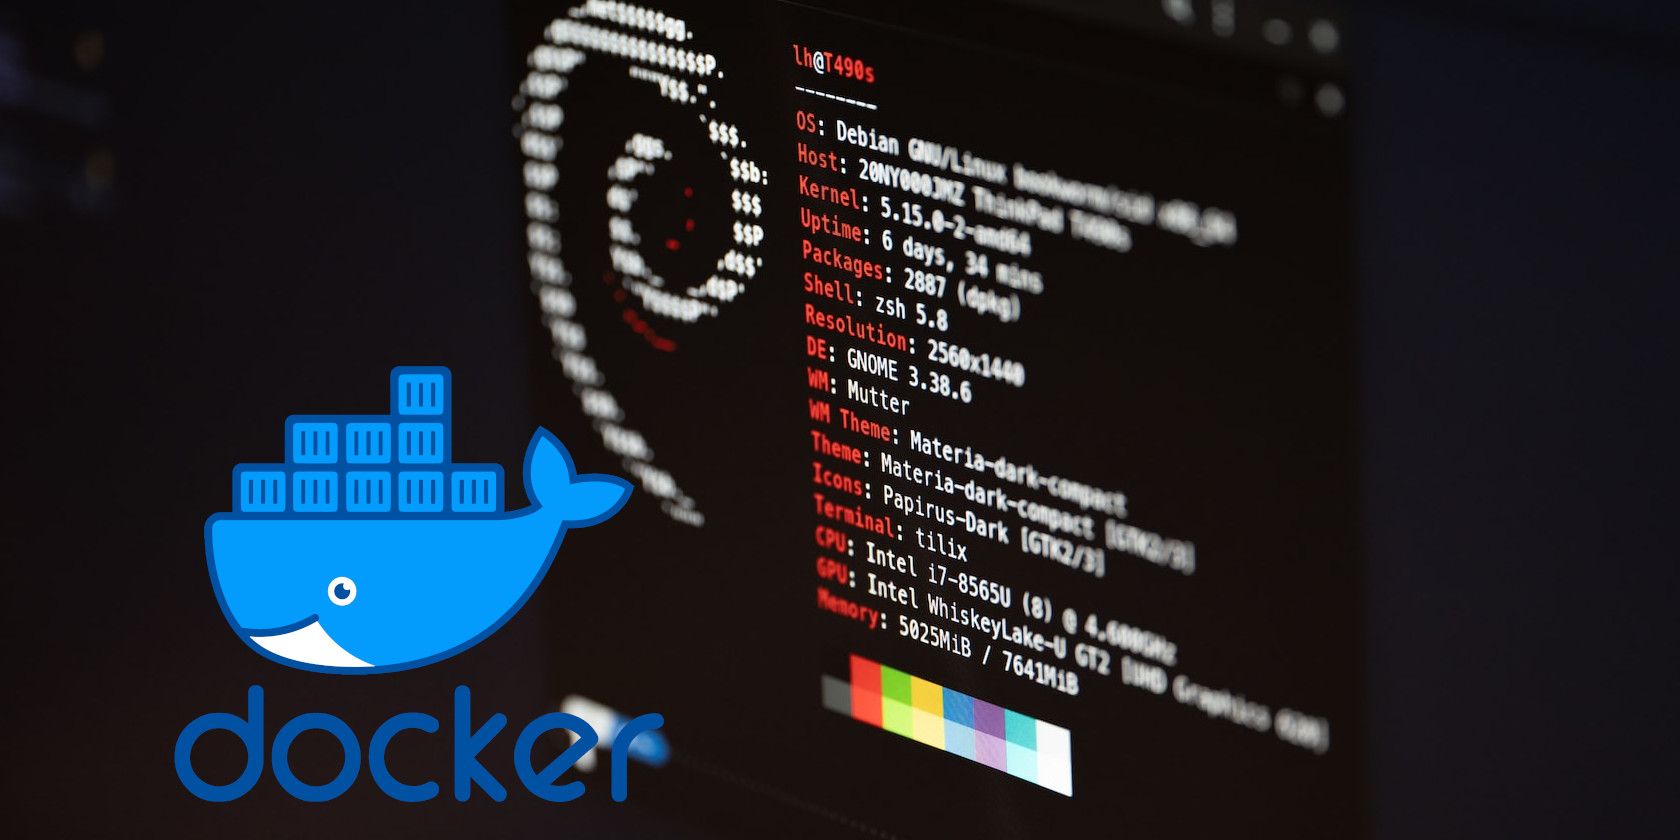 The docker logo alongside a screenshot of a linux terminal